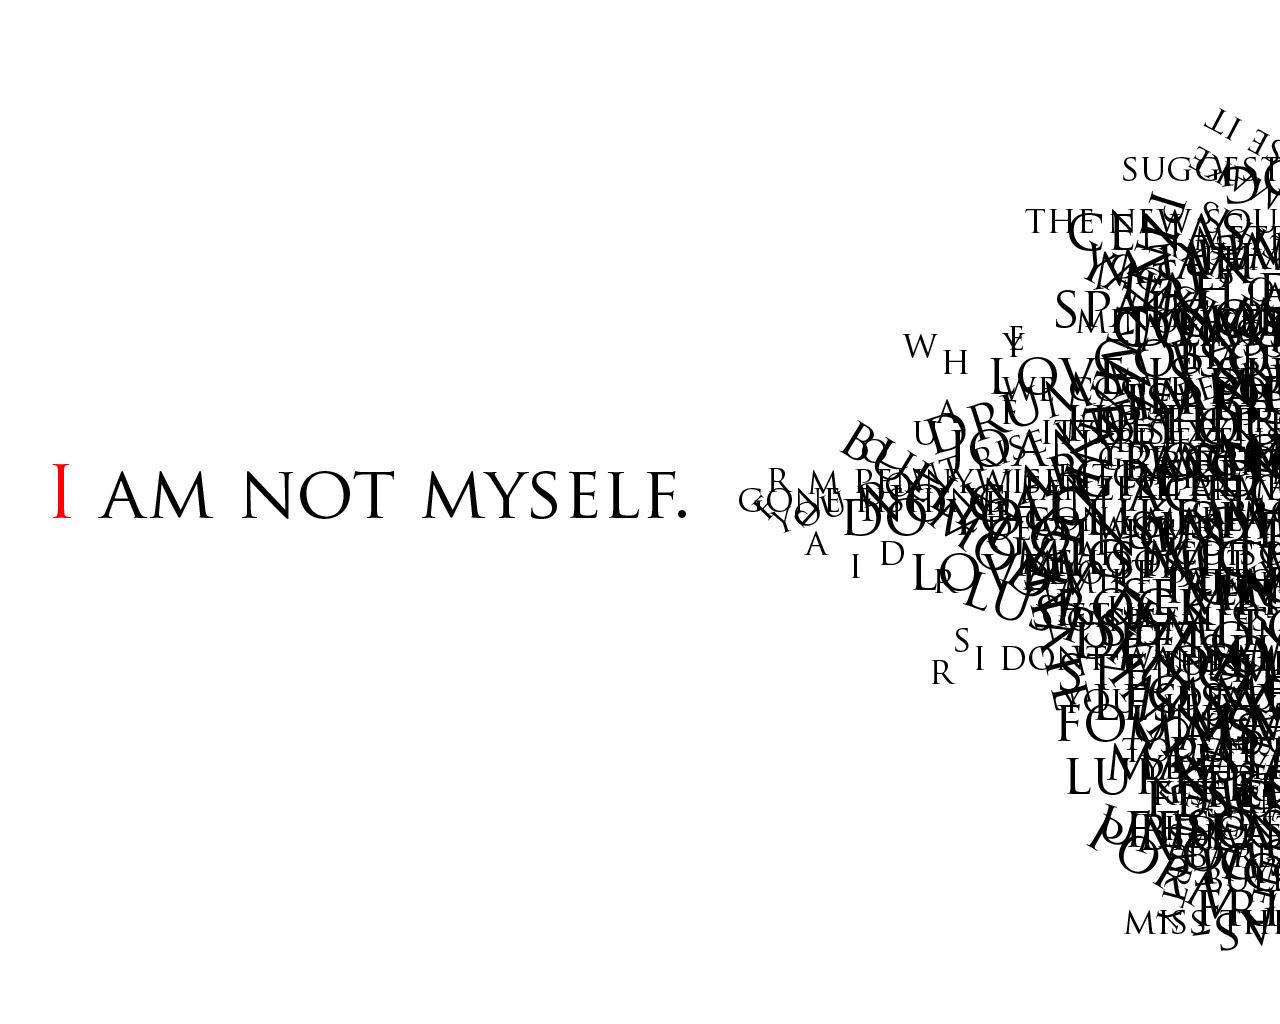 I am not myself